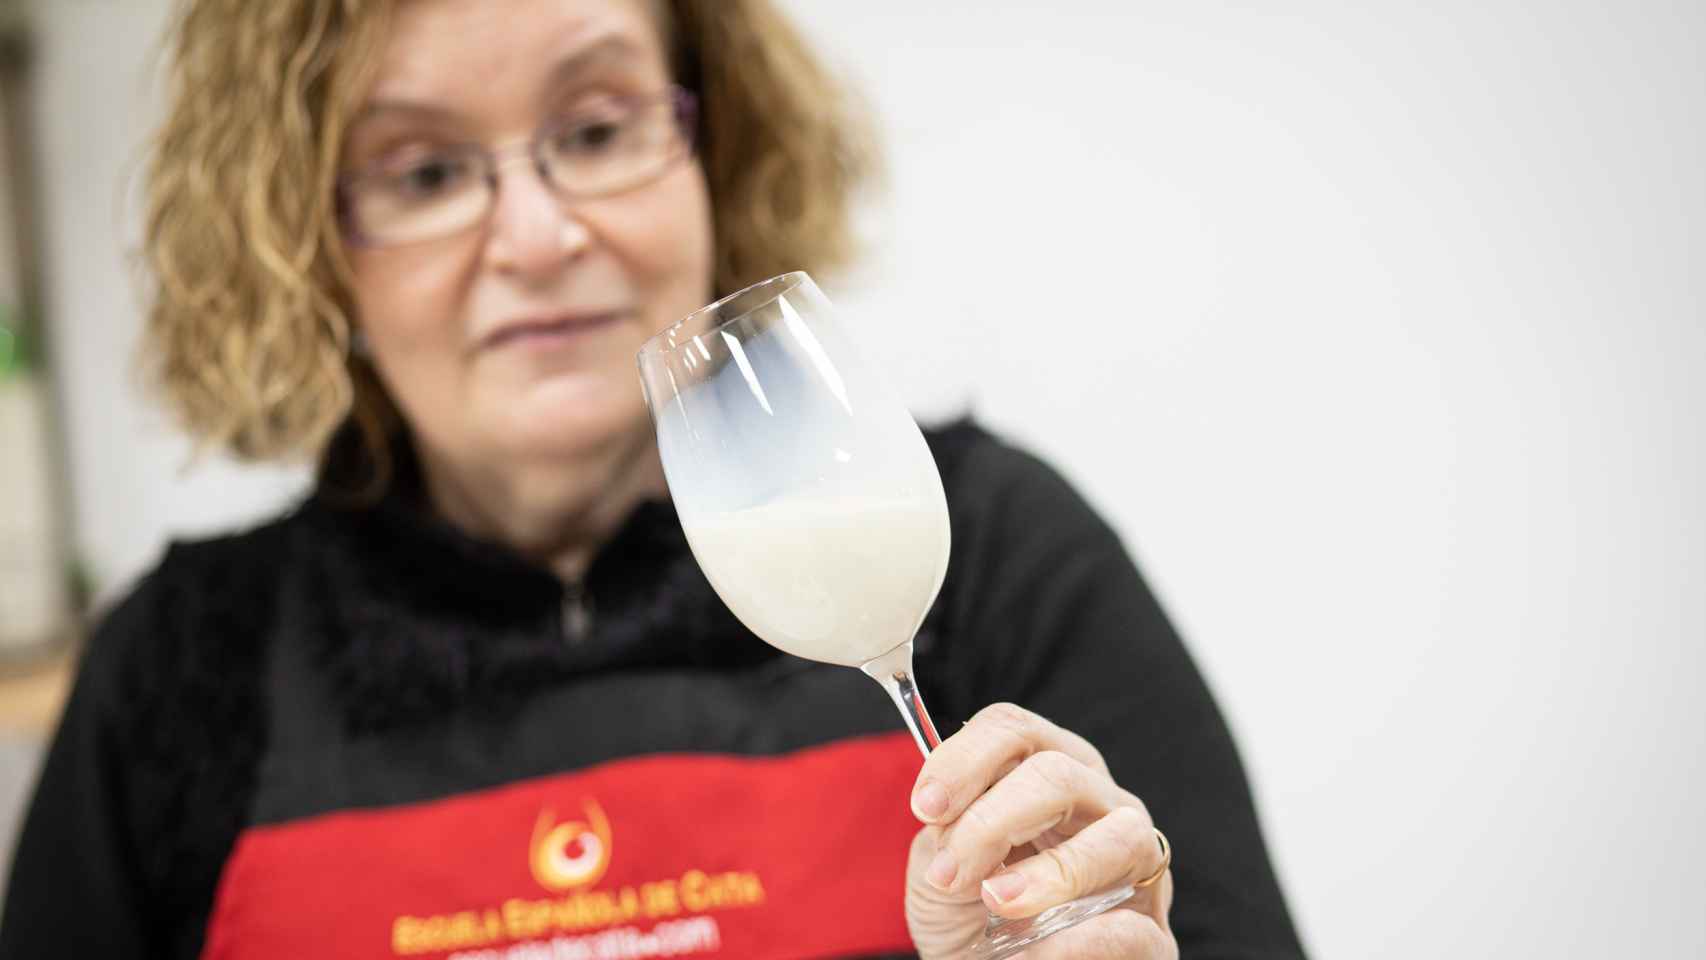 La experta Carmen siempre observa el rastro que deja cada leche en el cristal de la copa.